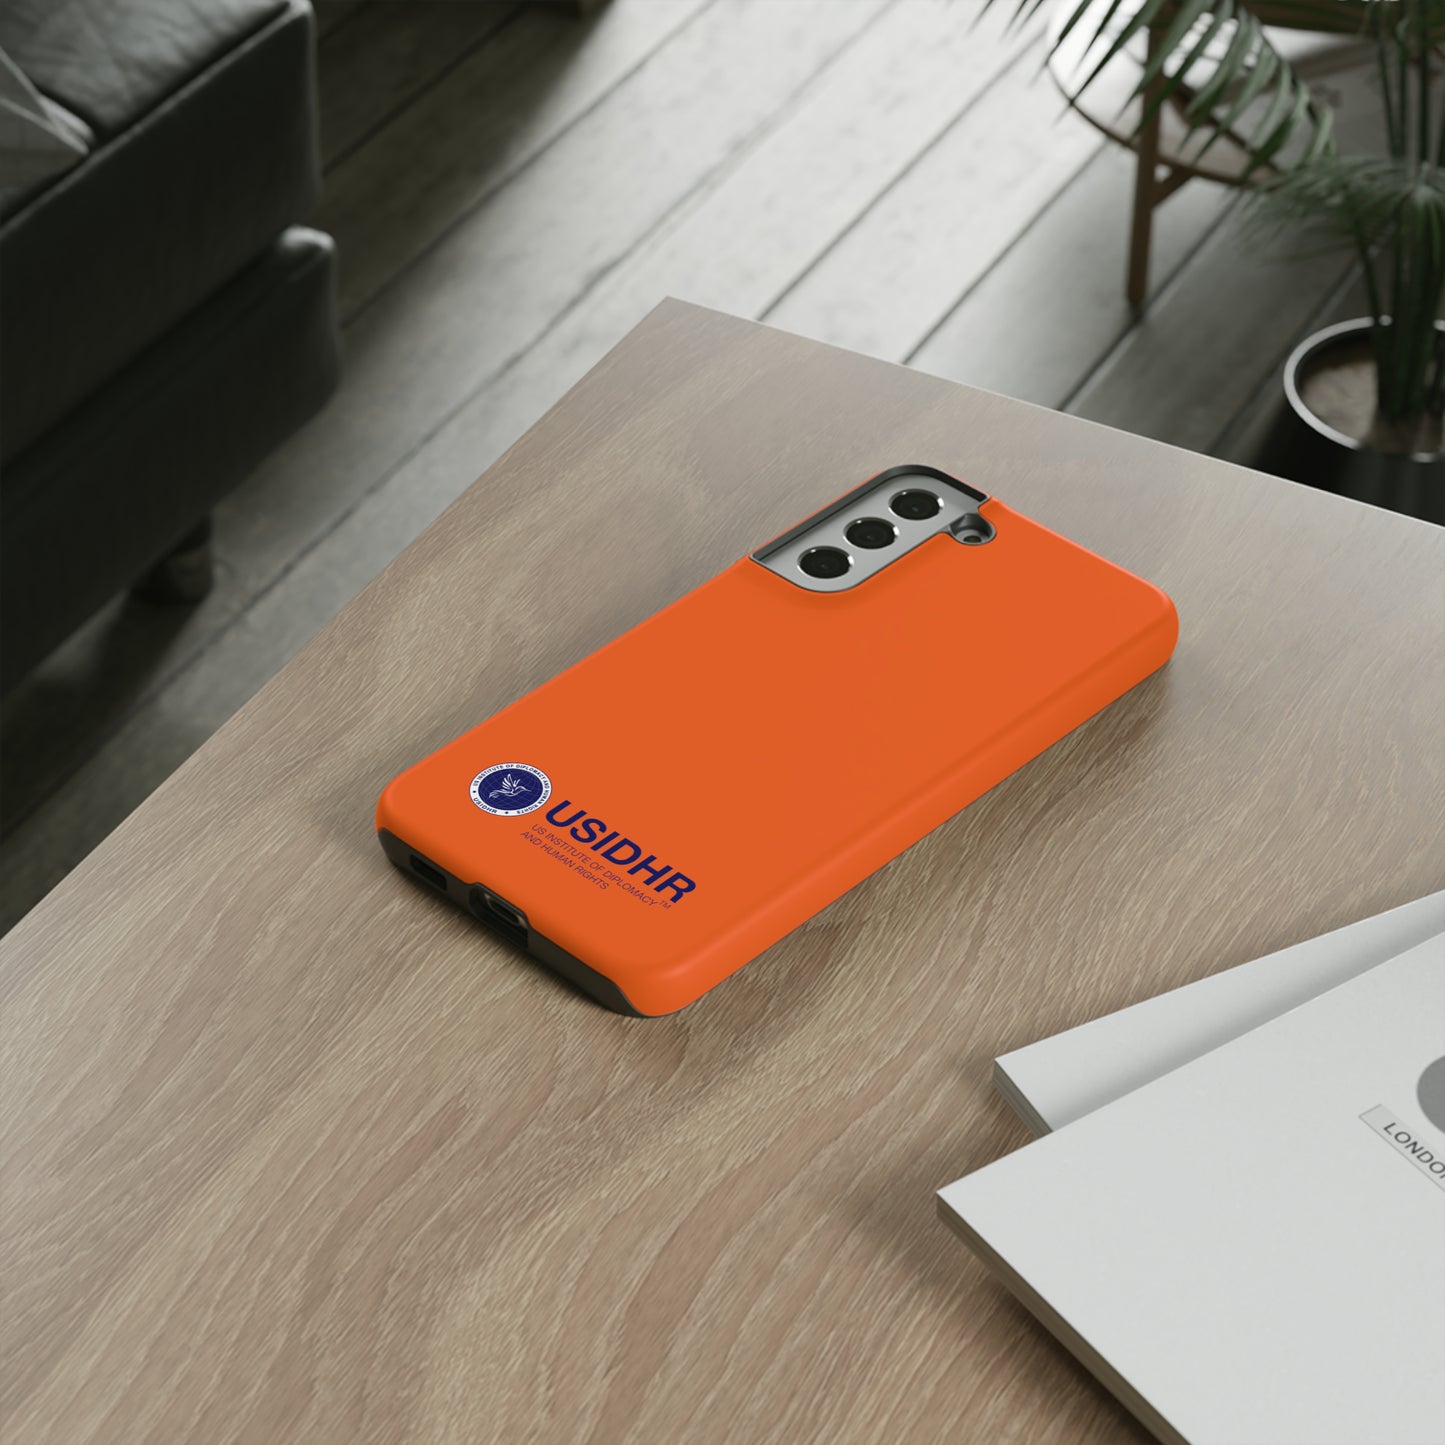 Orange USIDHR Phone Case (compatible with iPhone, Samsung, Google models)